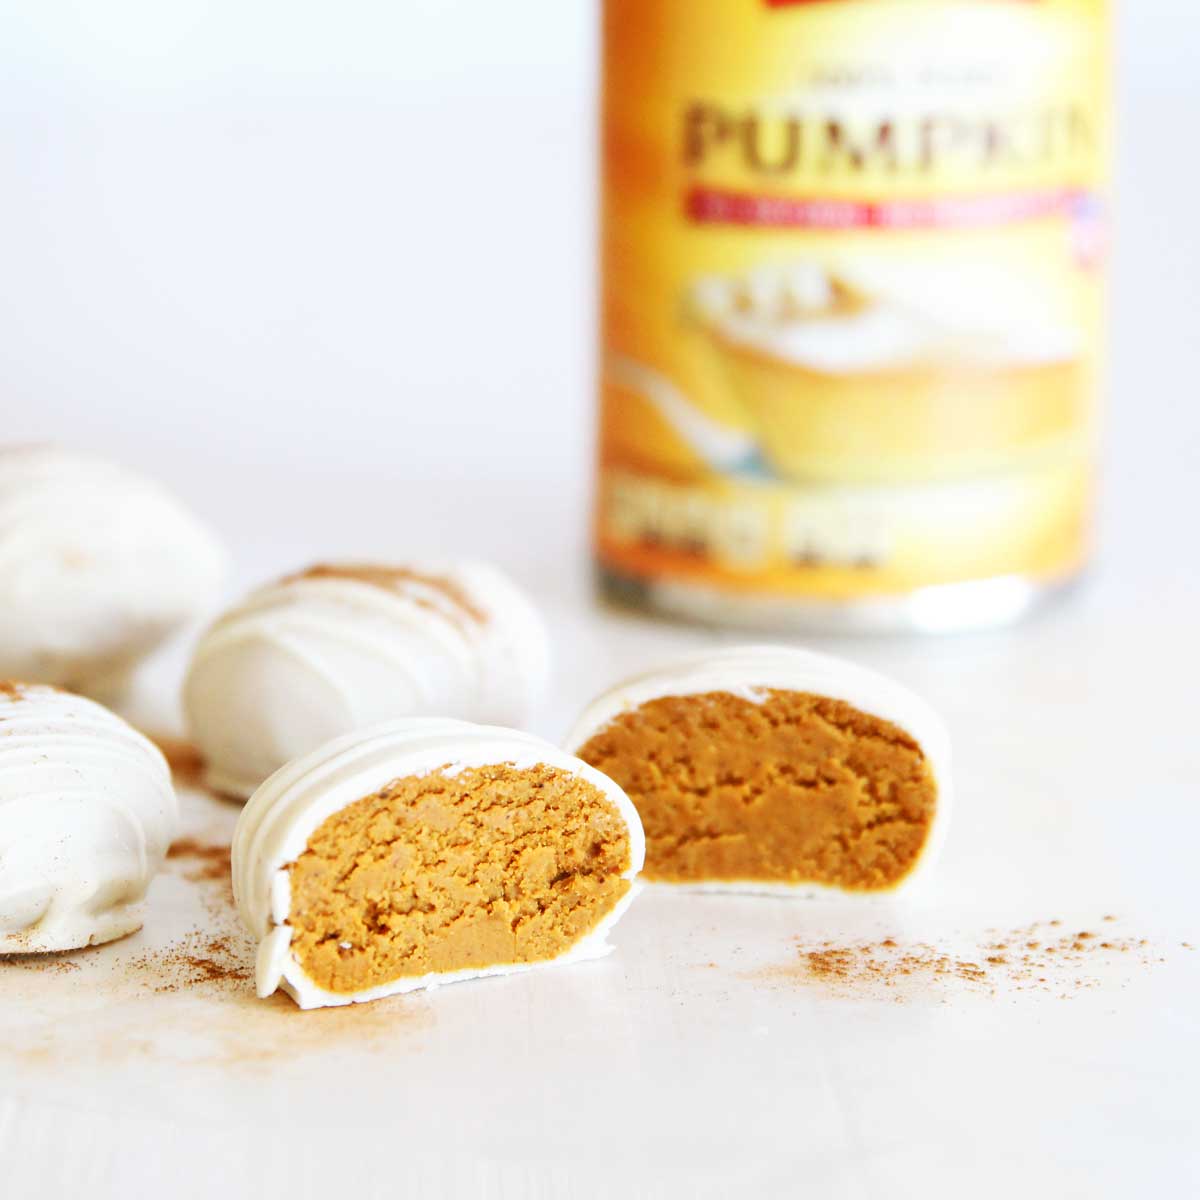 PB Fit Pumpkin Spice White Chocolate Easter Eggs (4-Ingredient Vegan Recipe!) - Walnut Butter Mooncakes